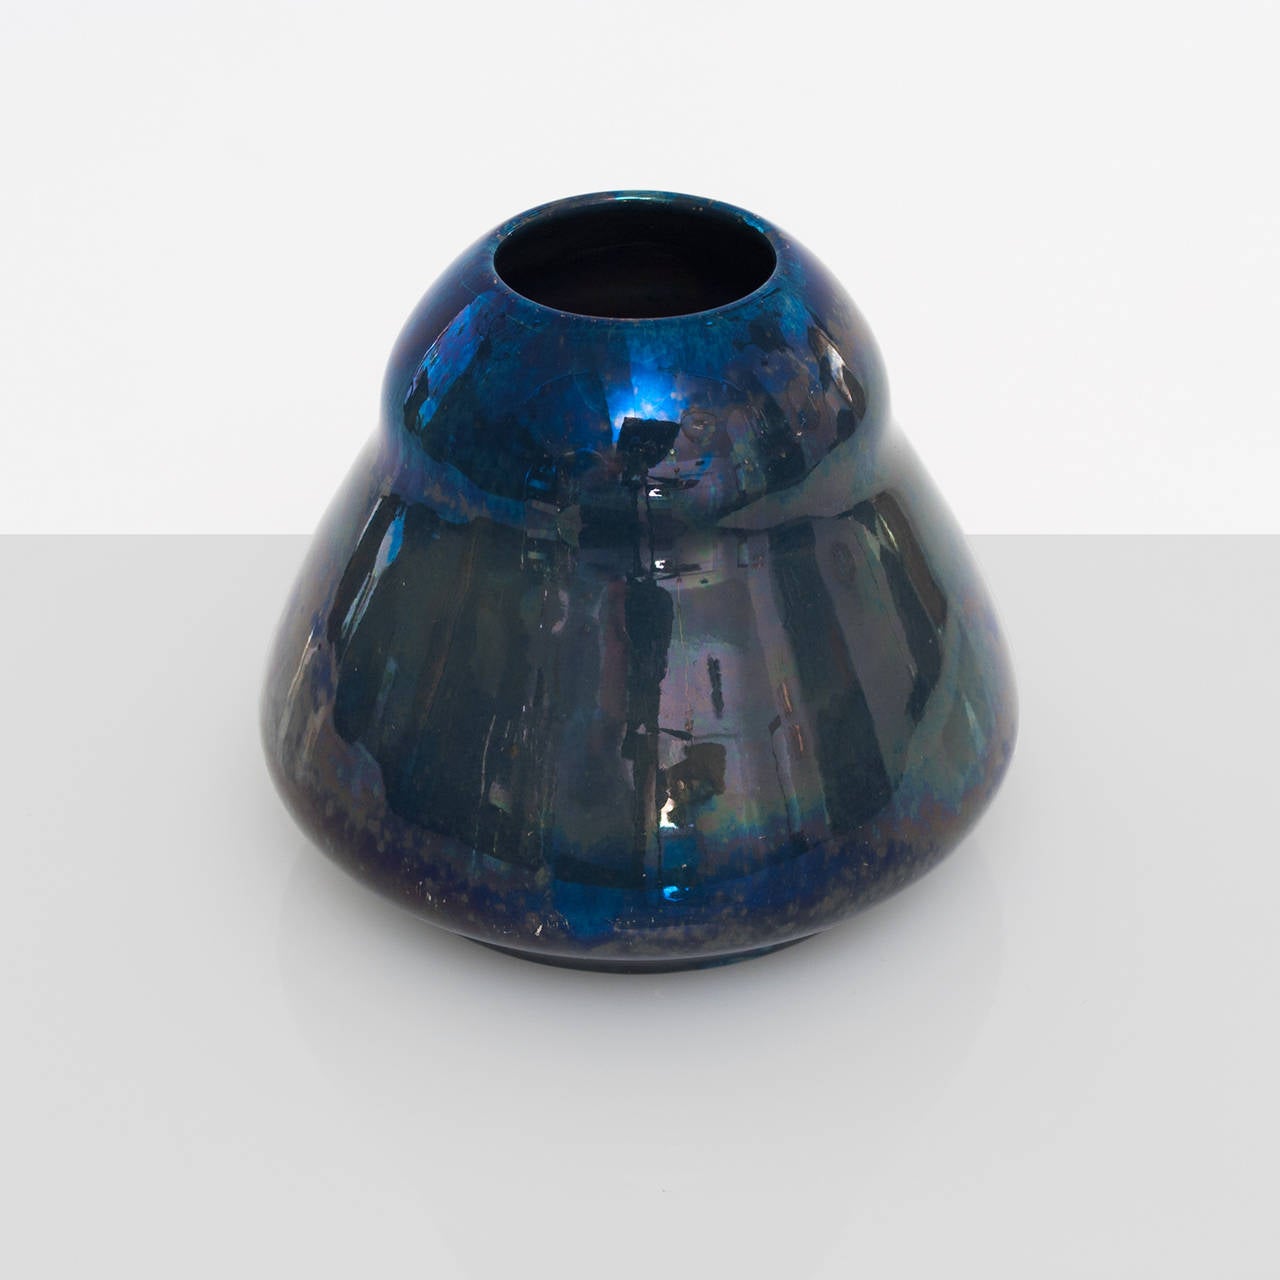 Glazed Swedish Art Deco Luster Glaze Ceramic Vase from Höganäs Keramik